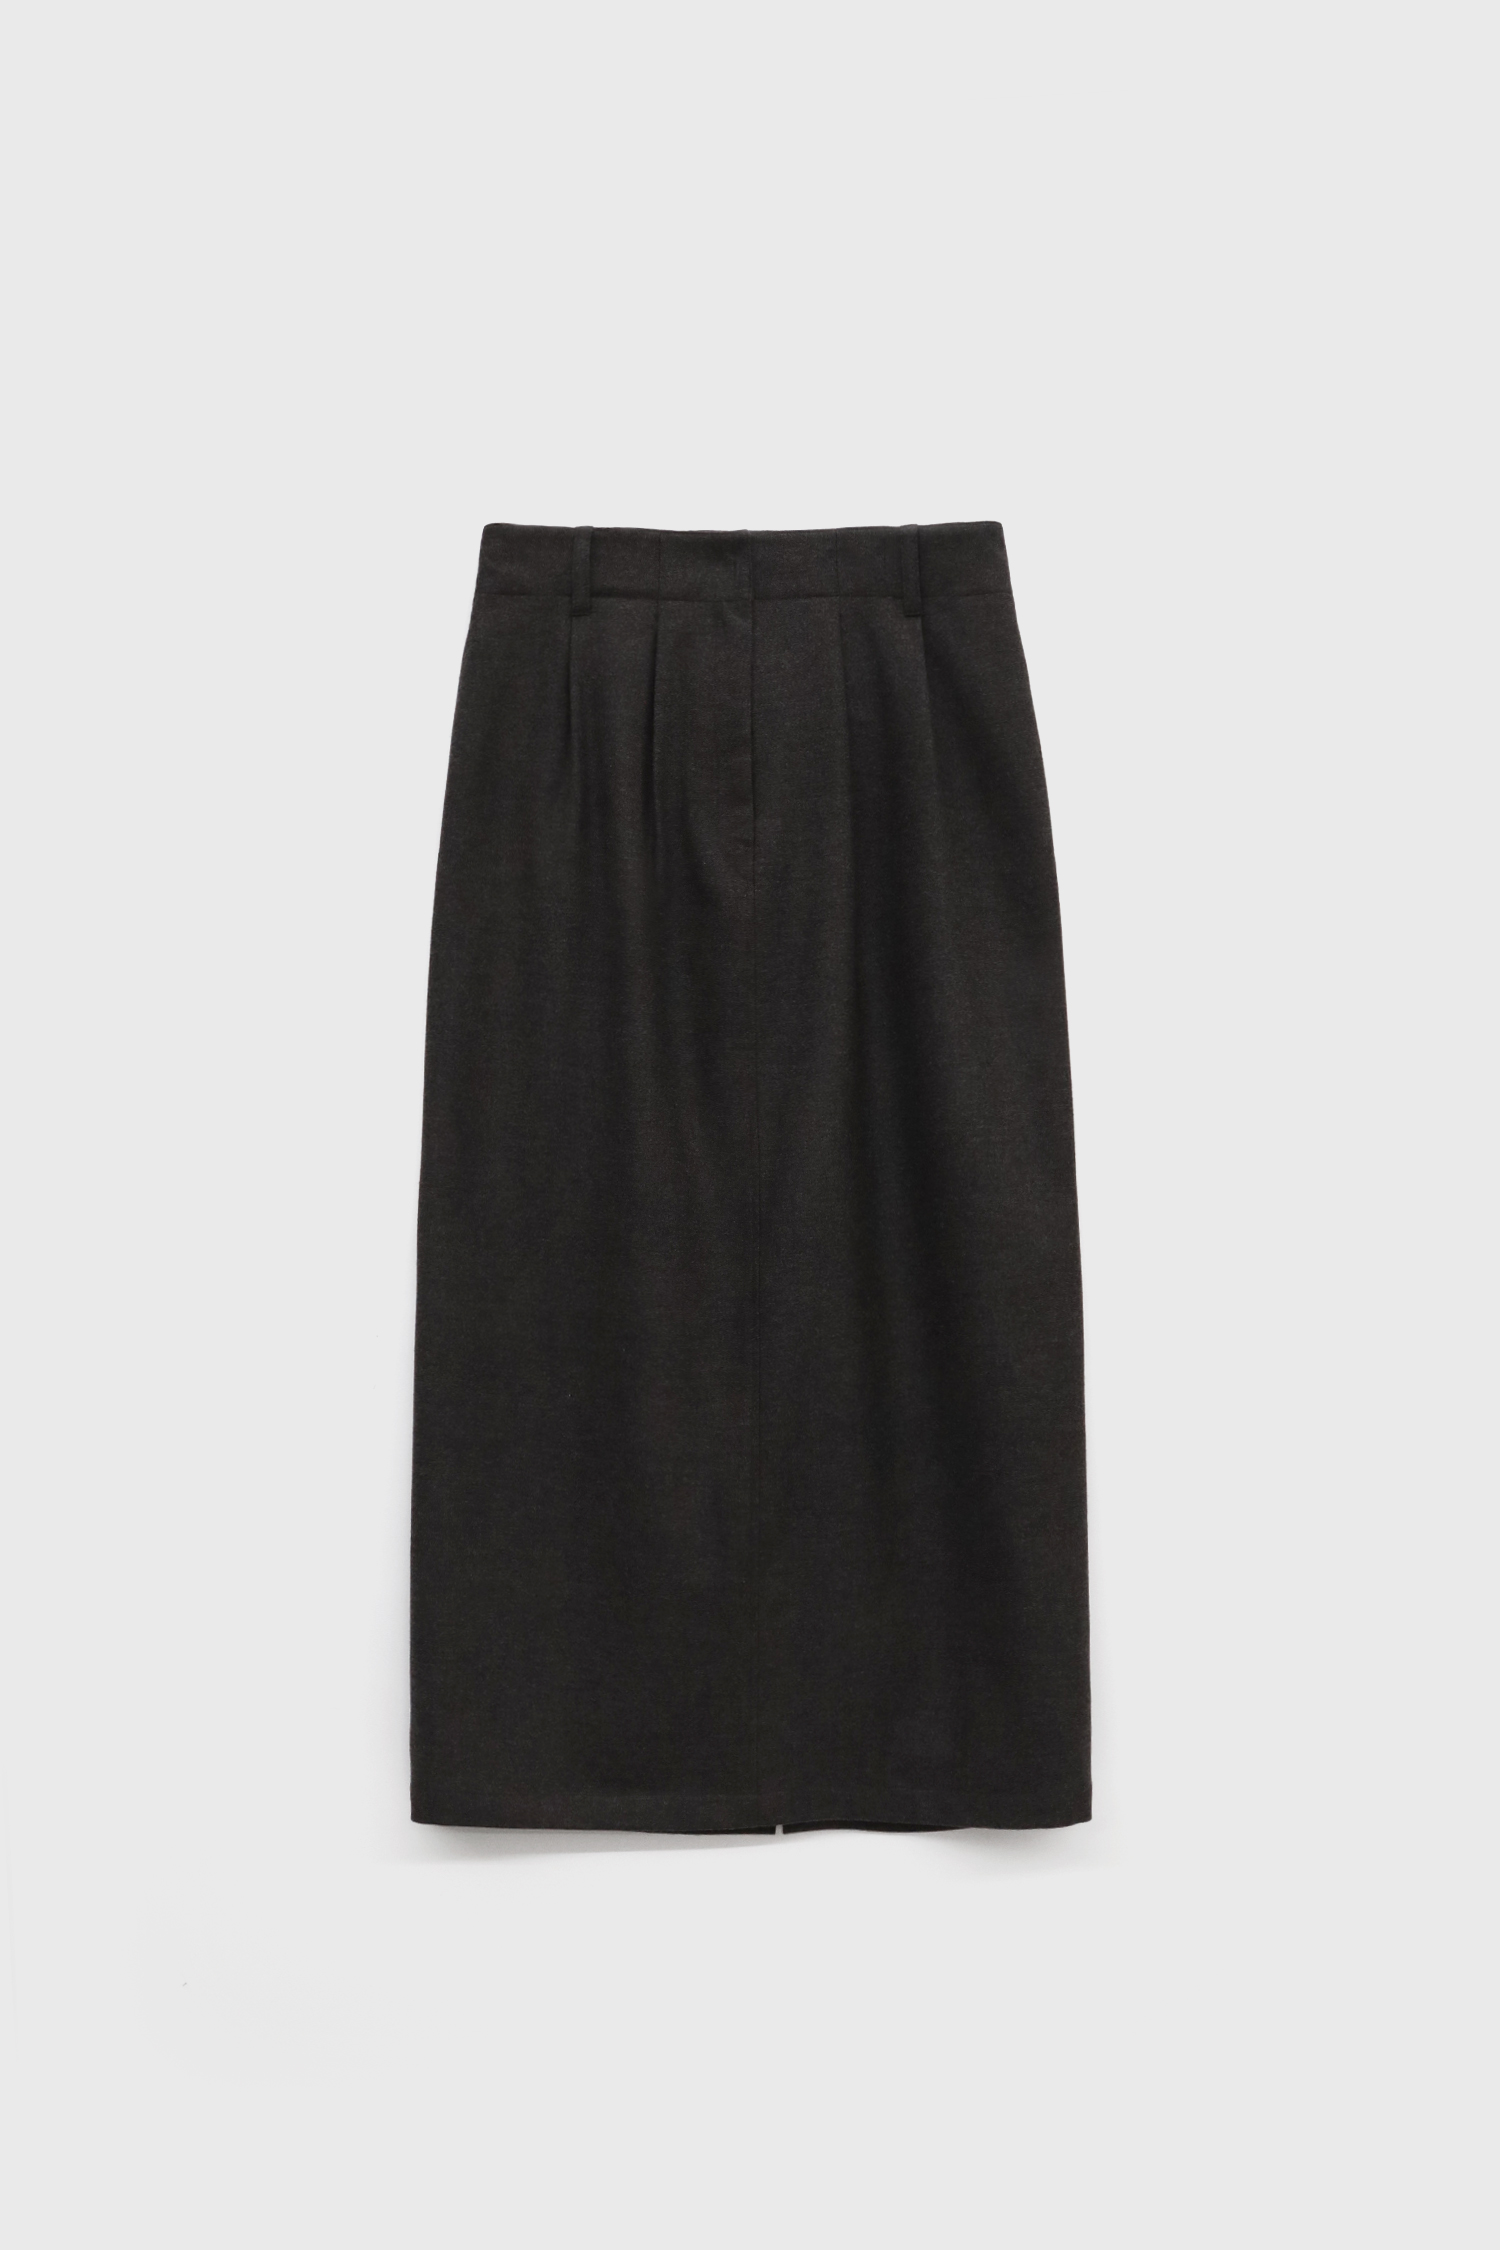 Cash Wool Long Skirt